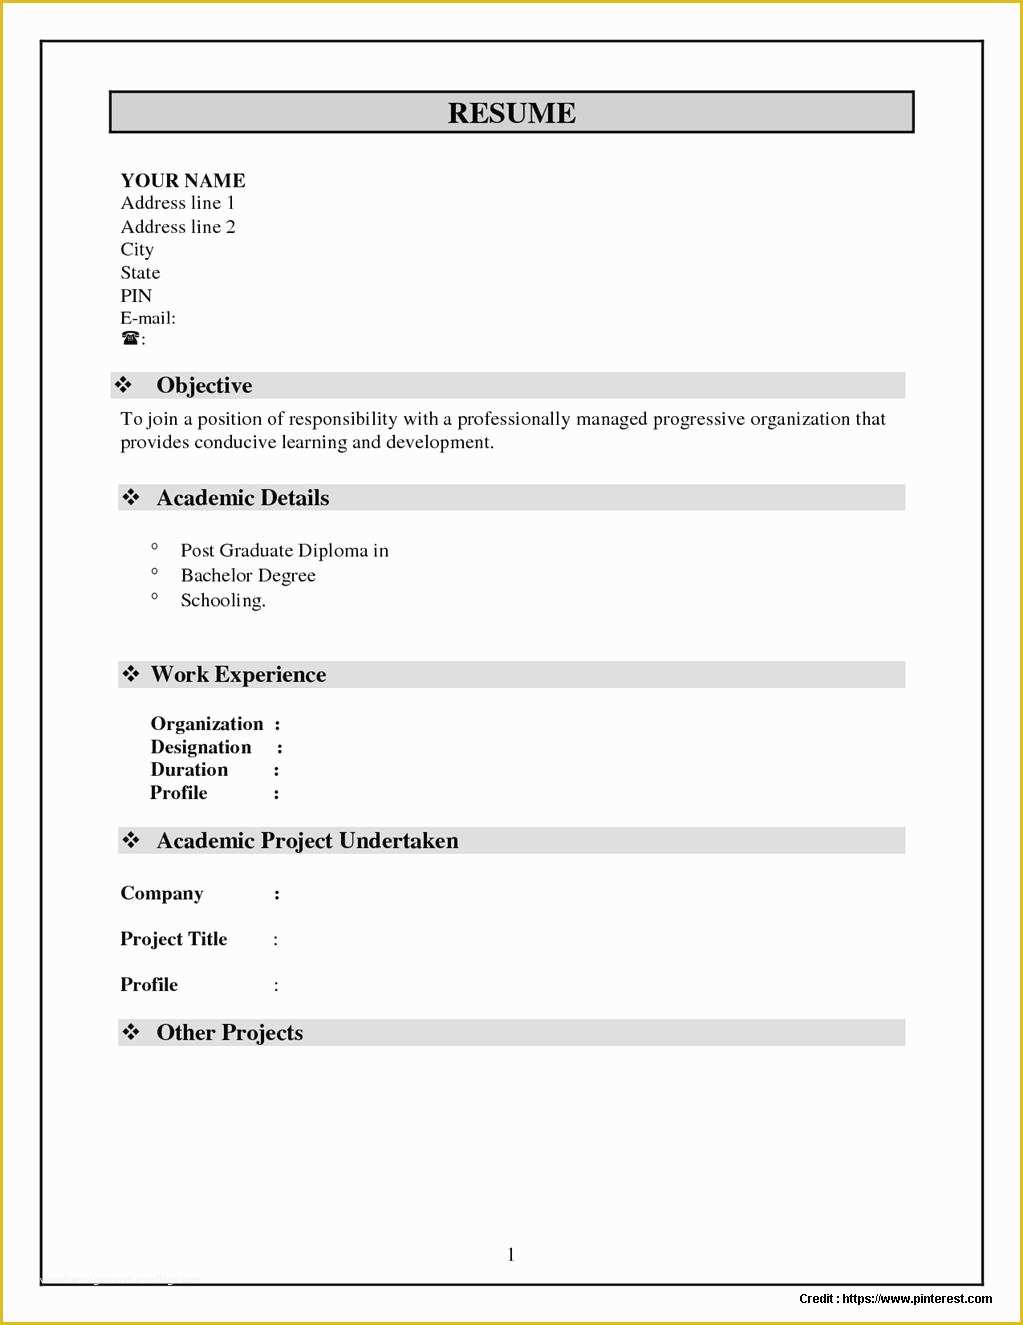 Free Resume Templates Download Pdf Of Sample Resume format Pdf Download Free Resume Resume